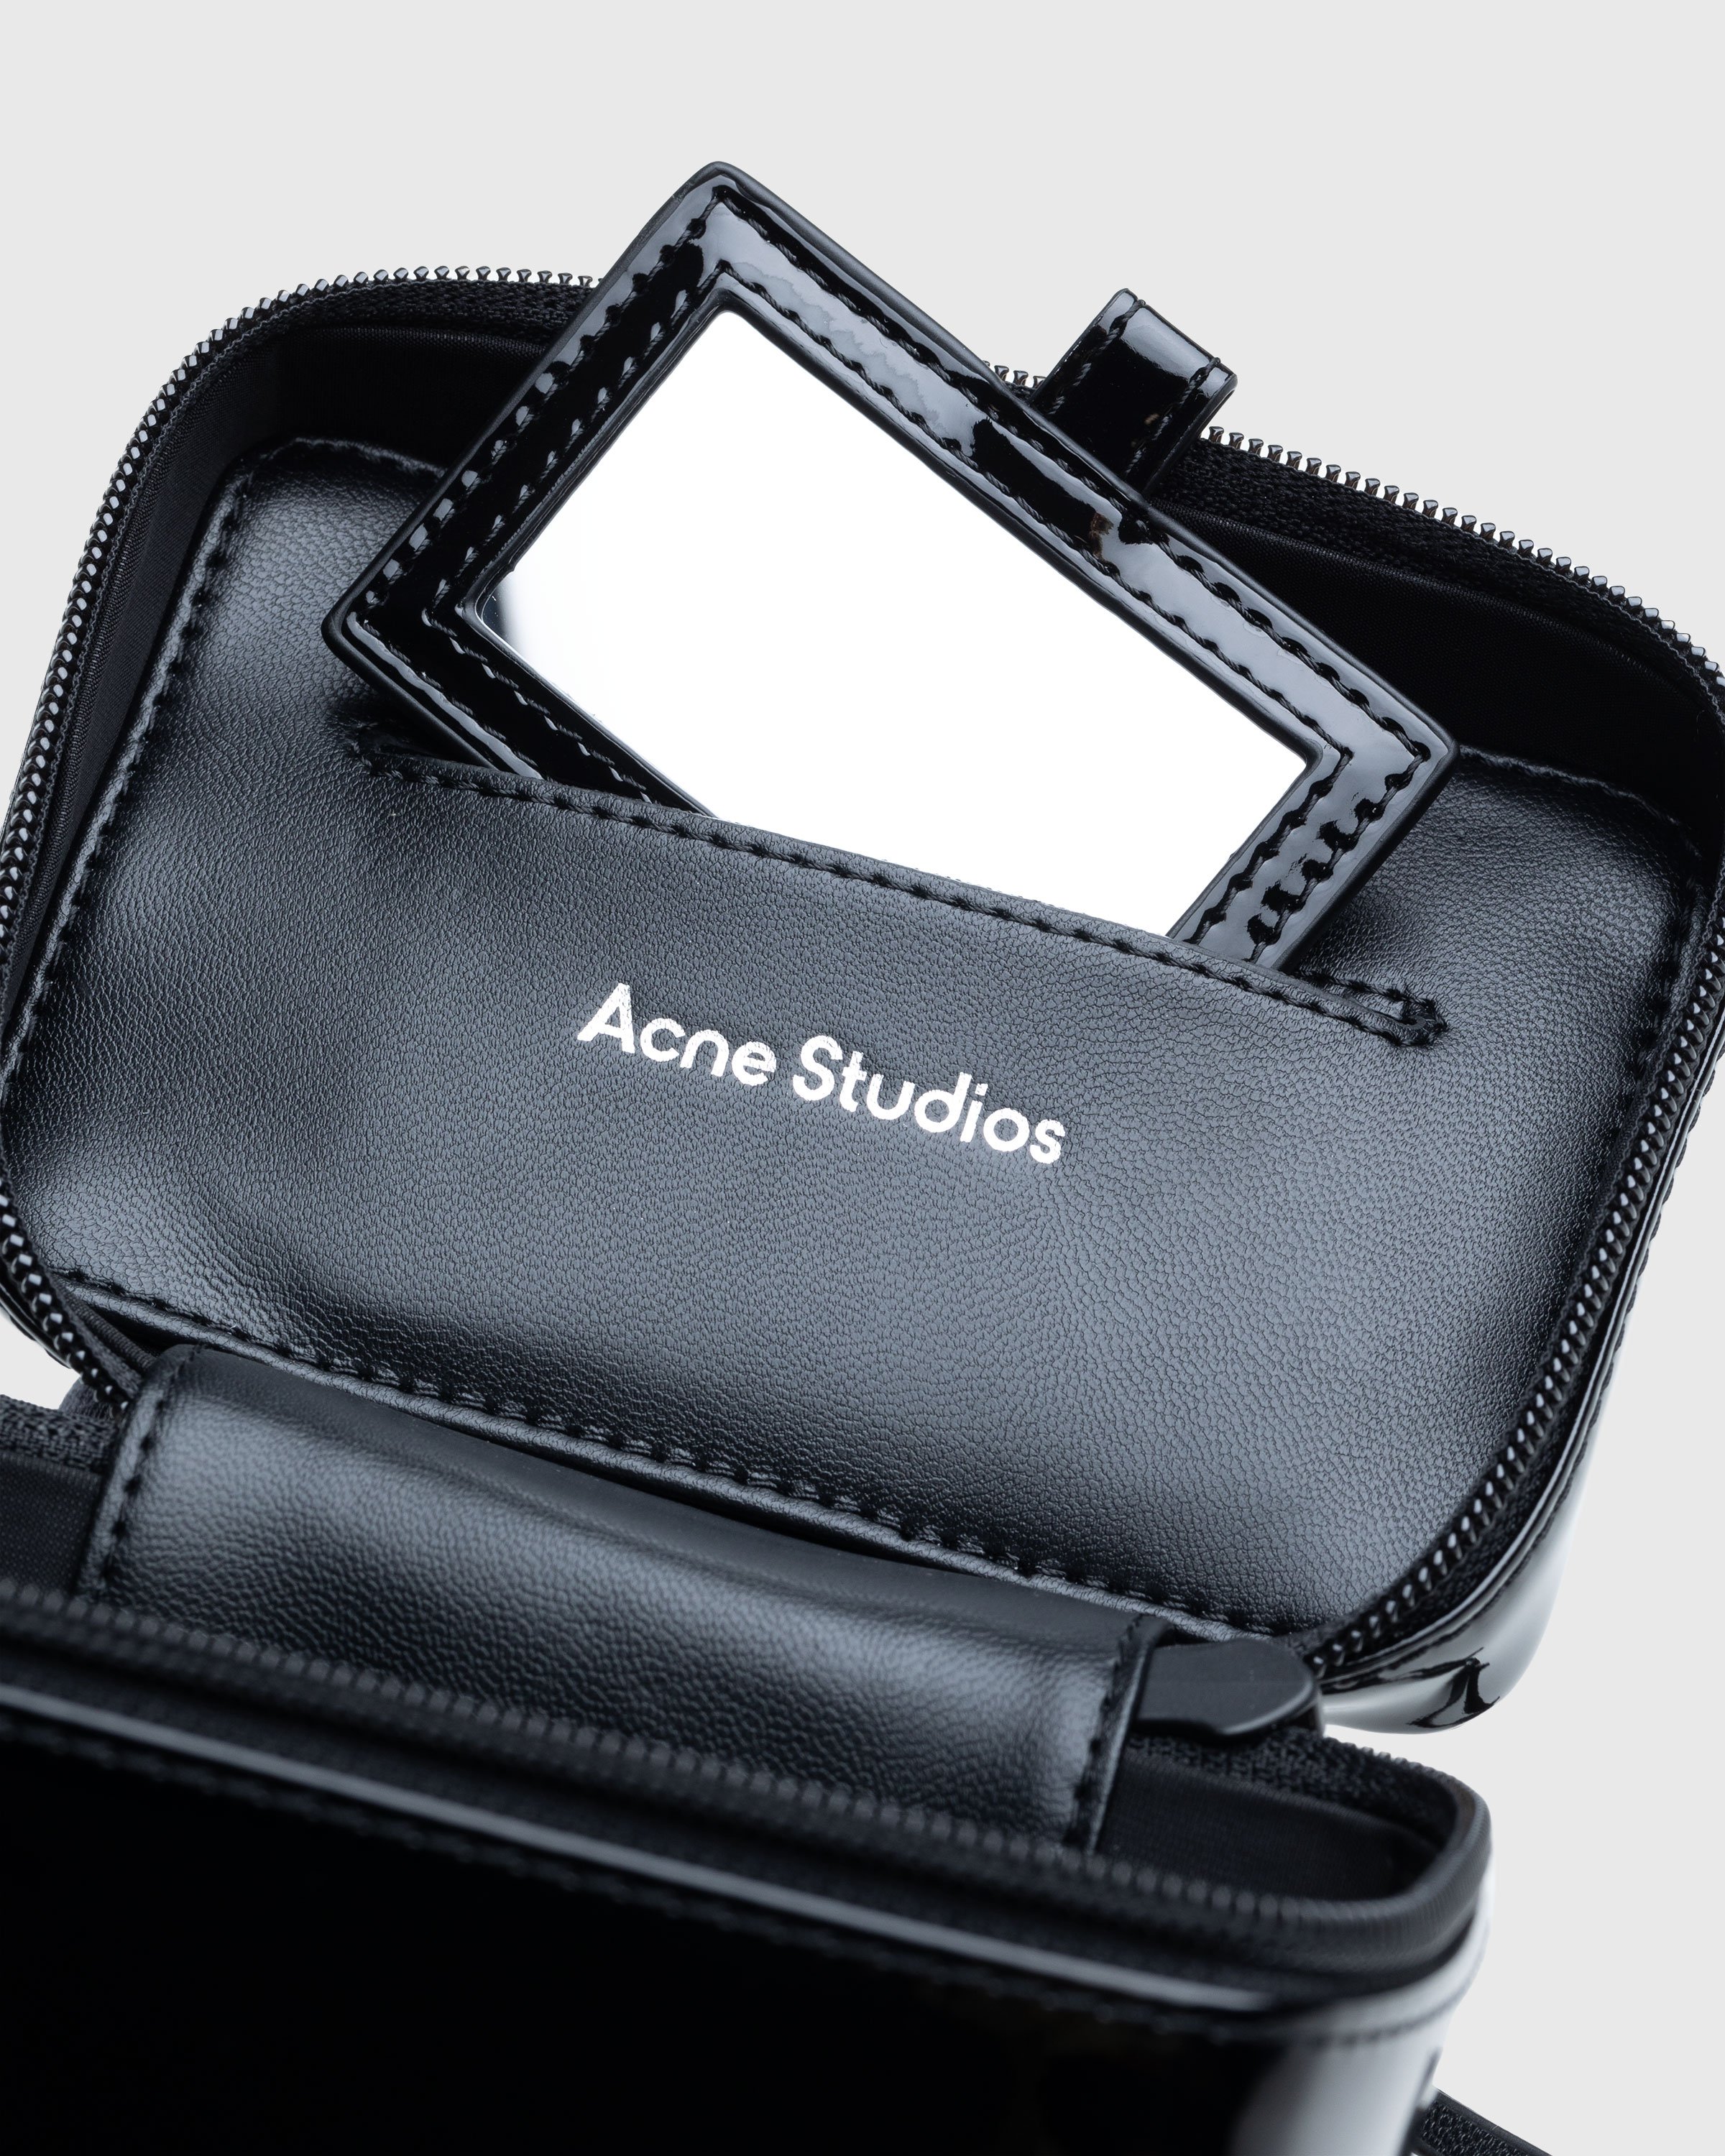 Acne Studios - Face Vanity Bag Black - Accessories - Black - Image 4